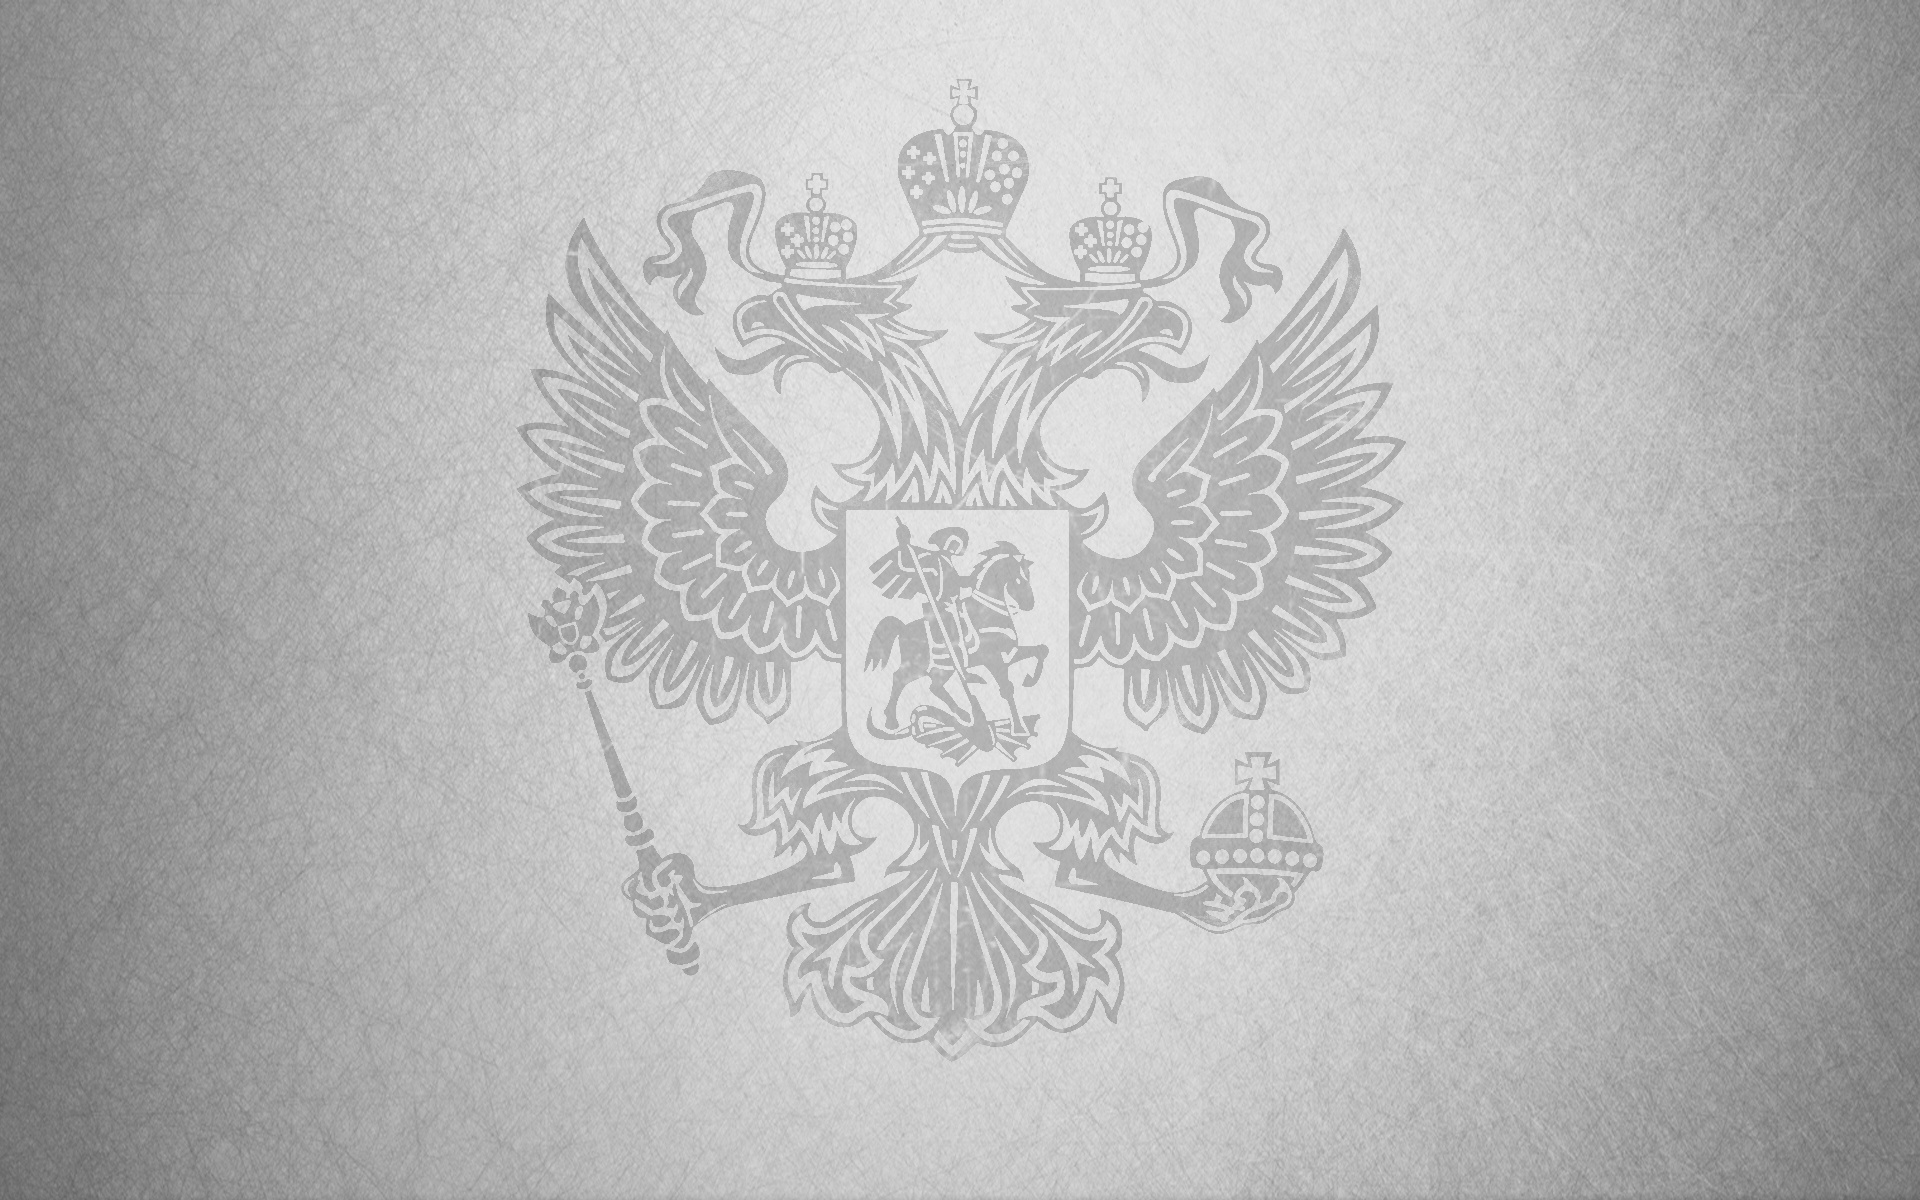 1018597 descargar imagen miscelaneo, ruso, escudo de armas de rusia: fondos de pantalla y protectores de pantalla gratis